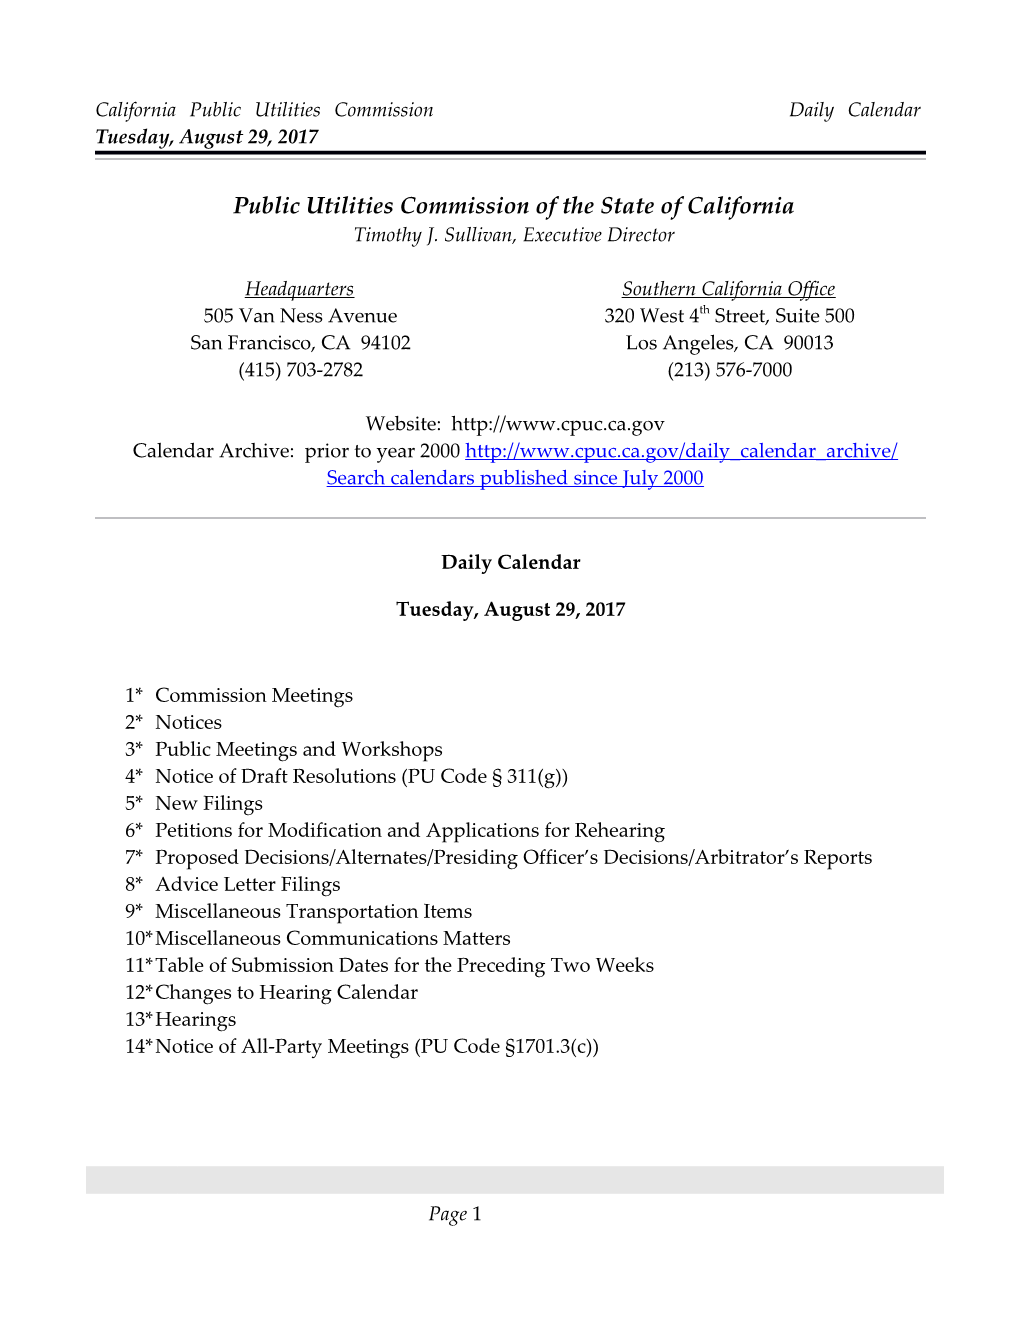 California Public Utilities Commission Daily Calendar Tuesday, August 29, 2017